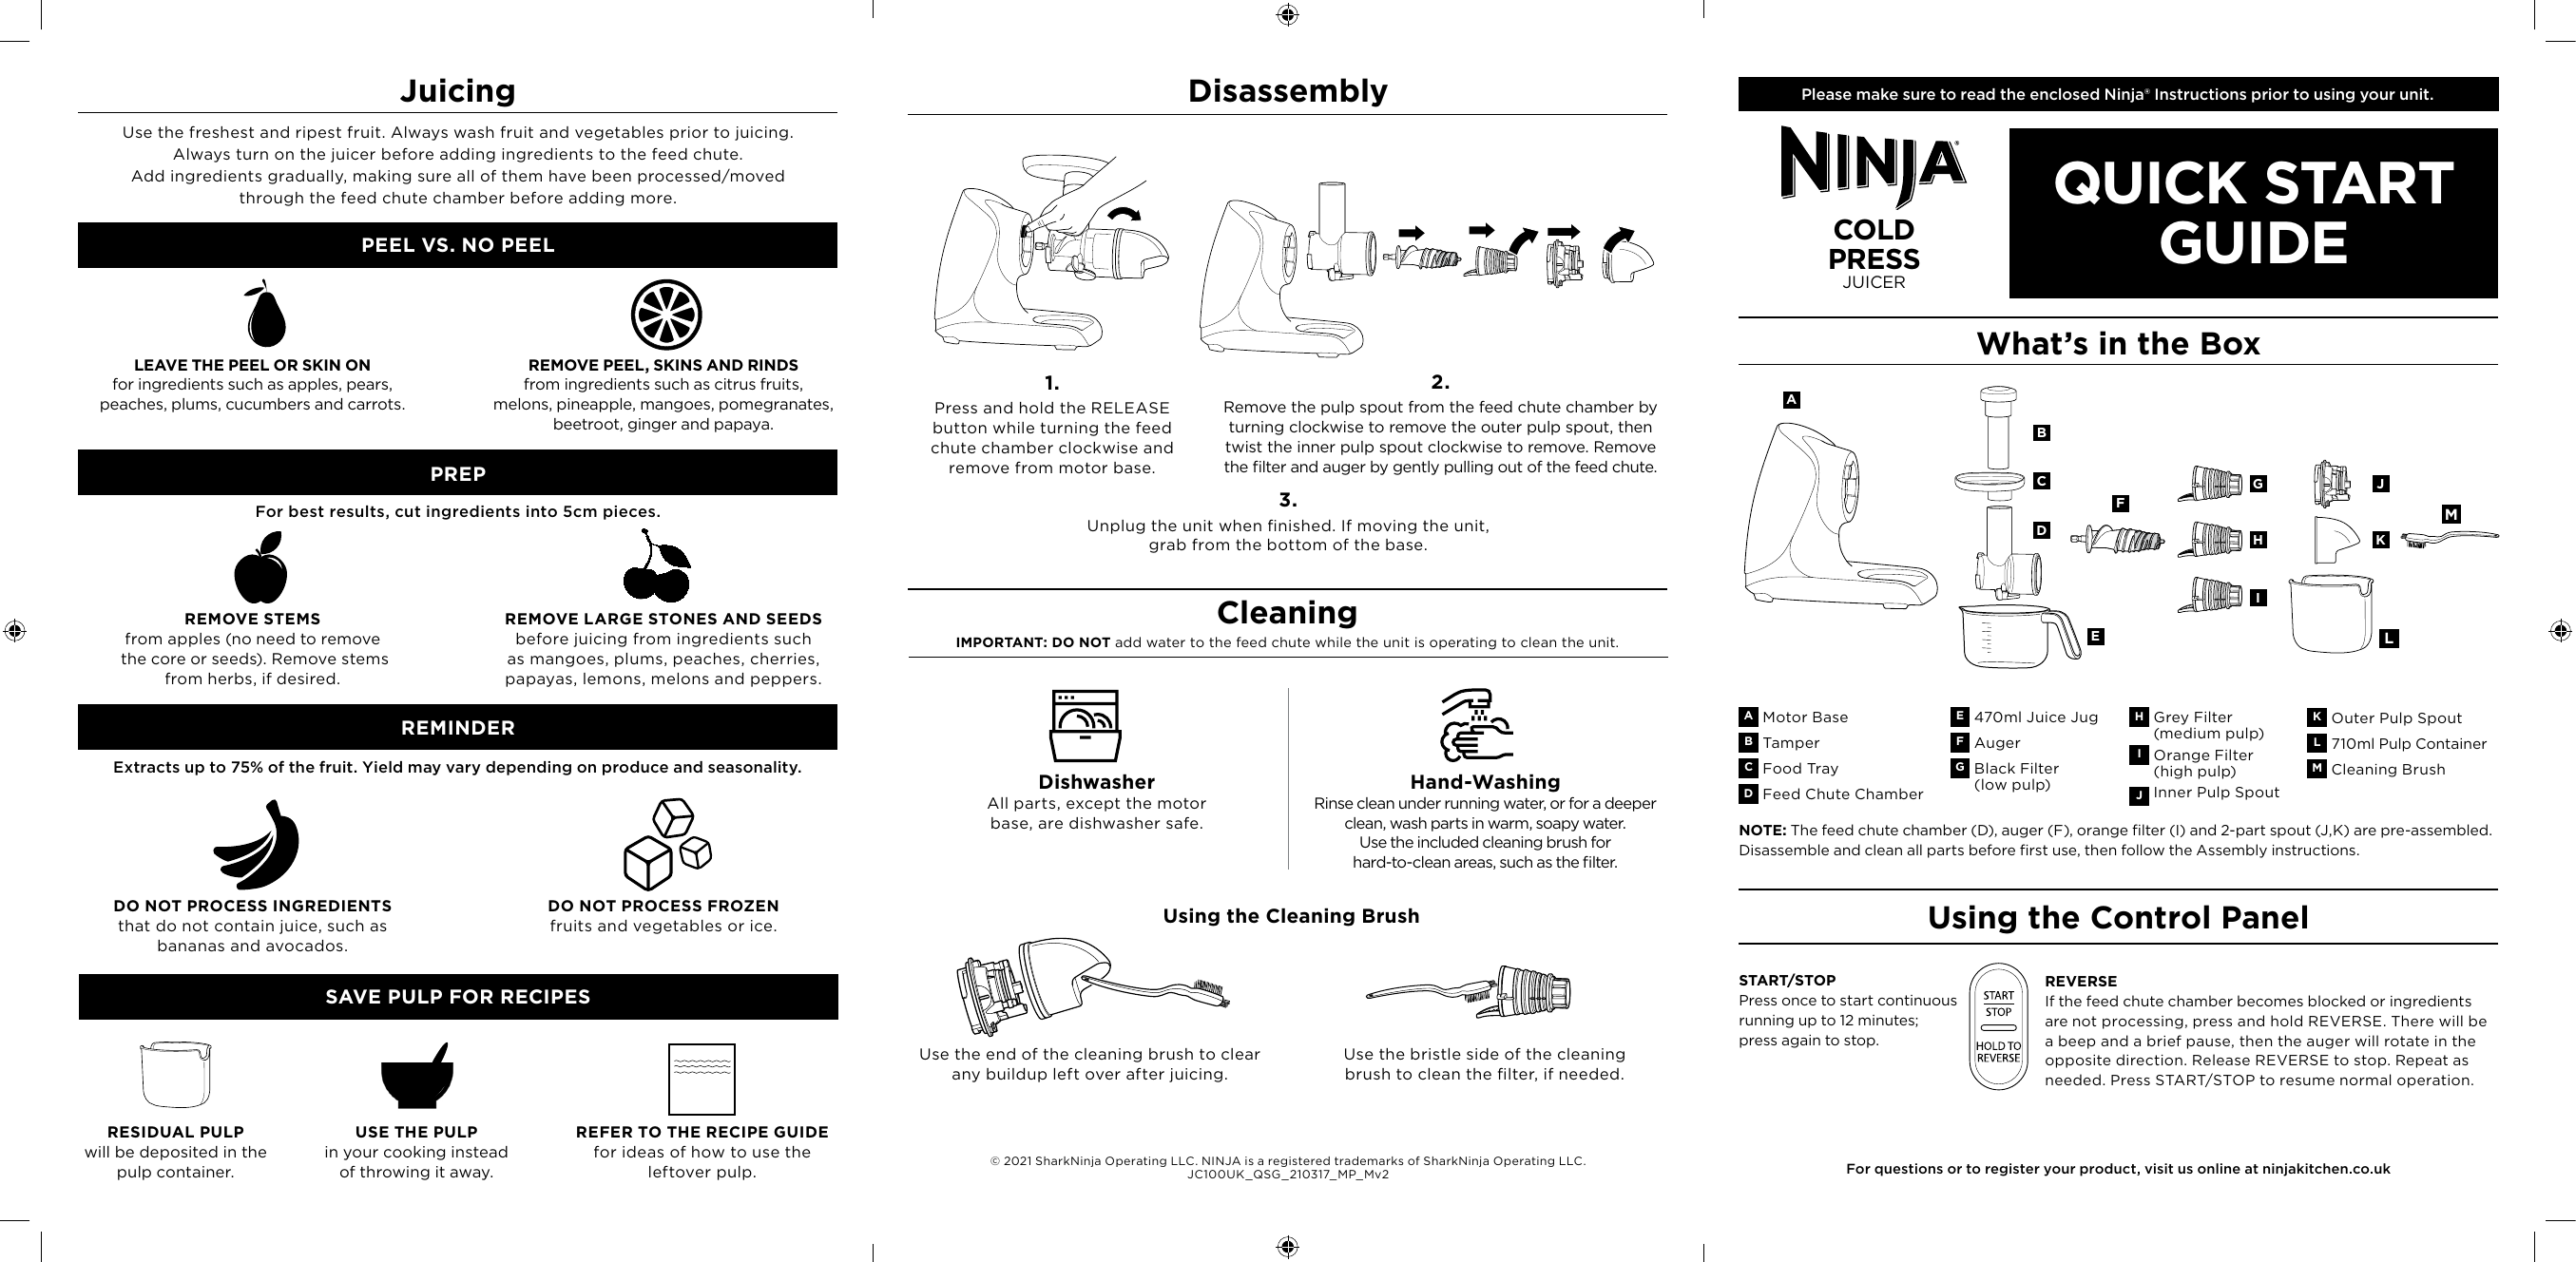 NINJA Cold Press Juicer Instructions